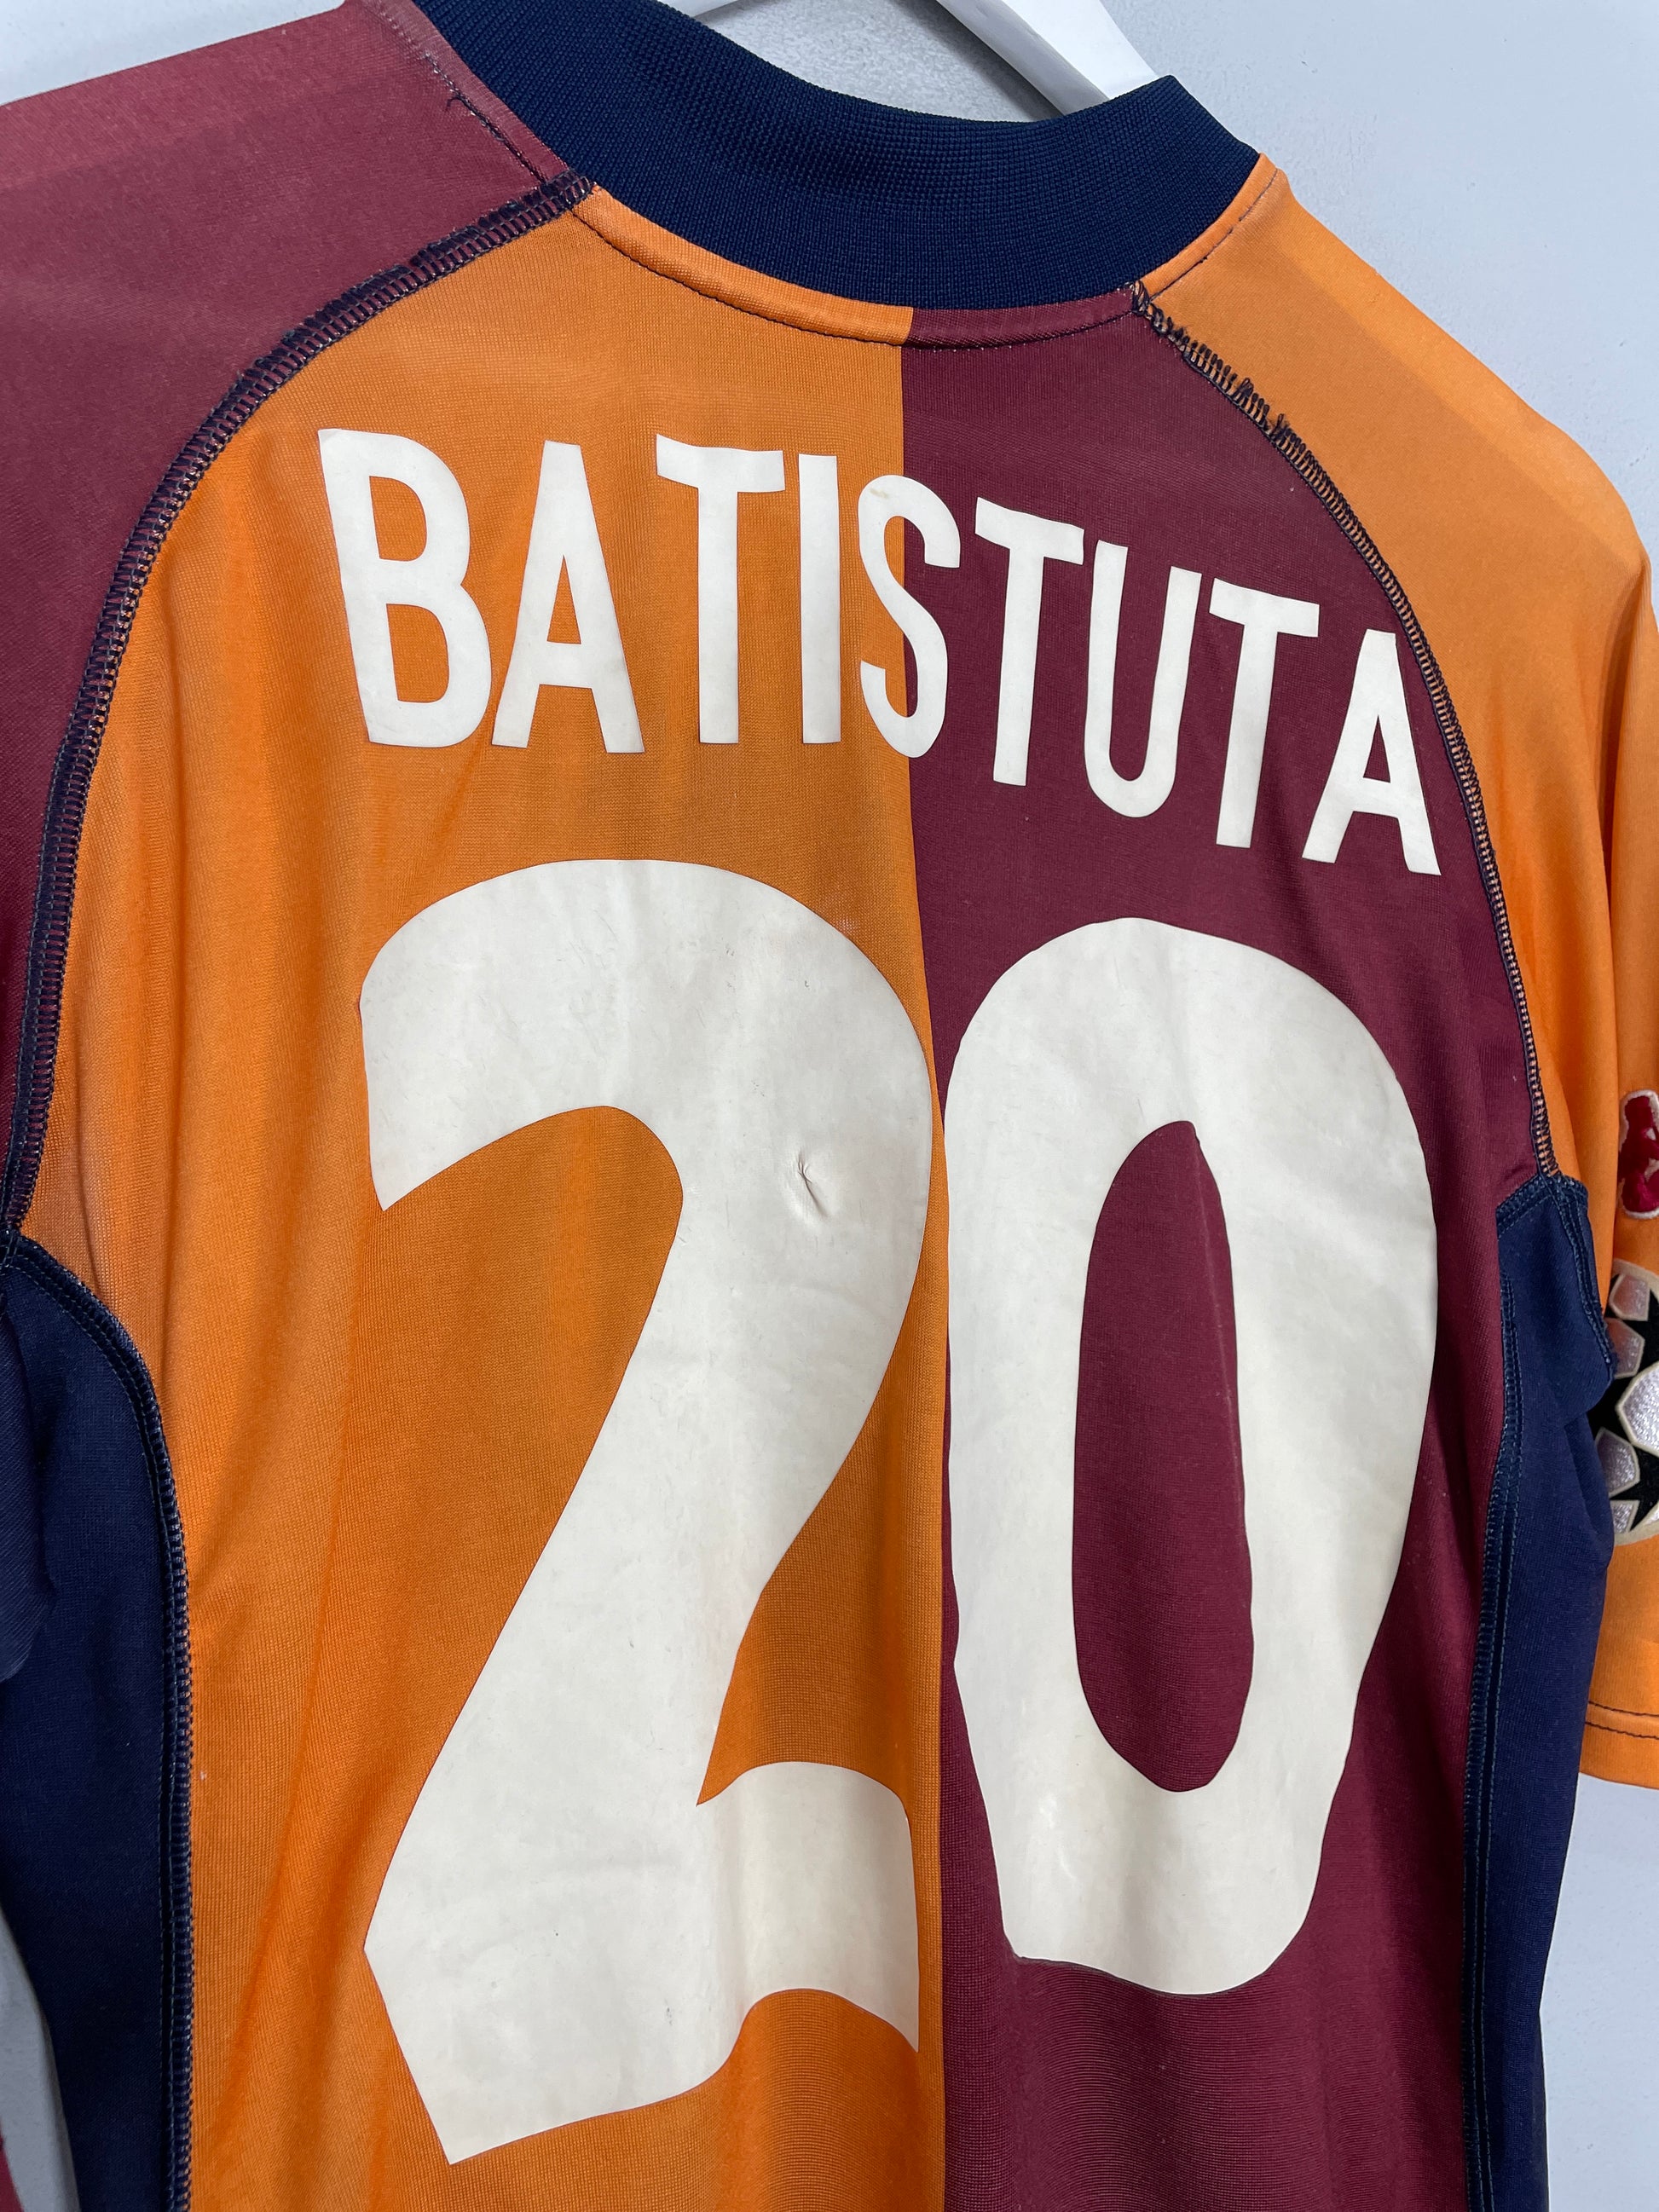 Cult Kits - Buy Roma Shirts, Classic Football Kits